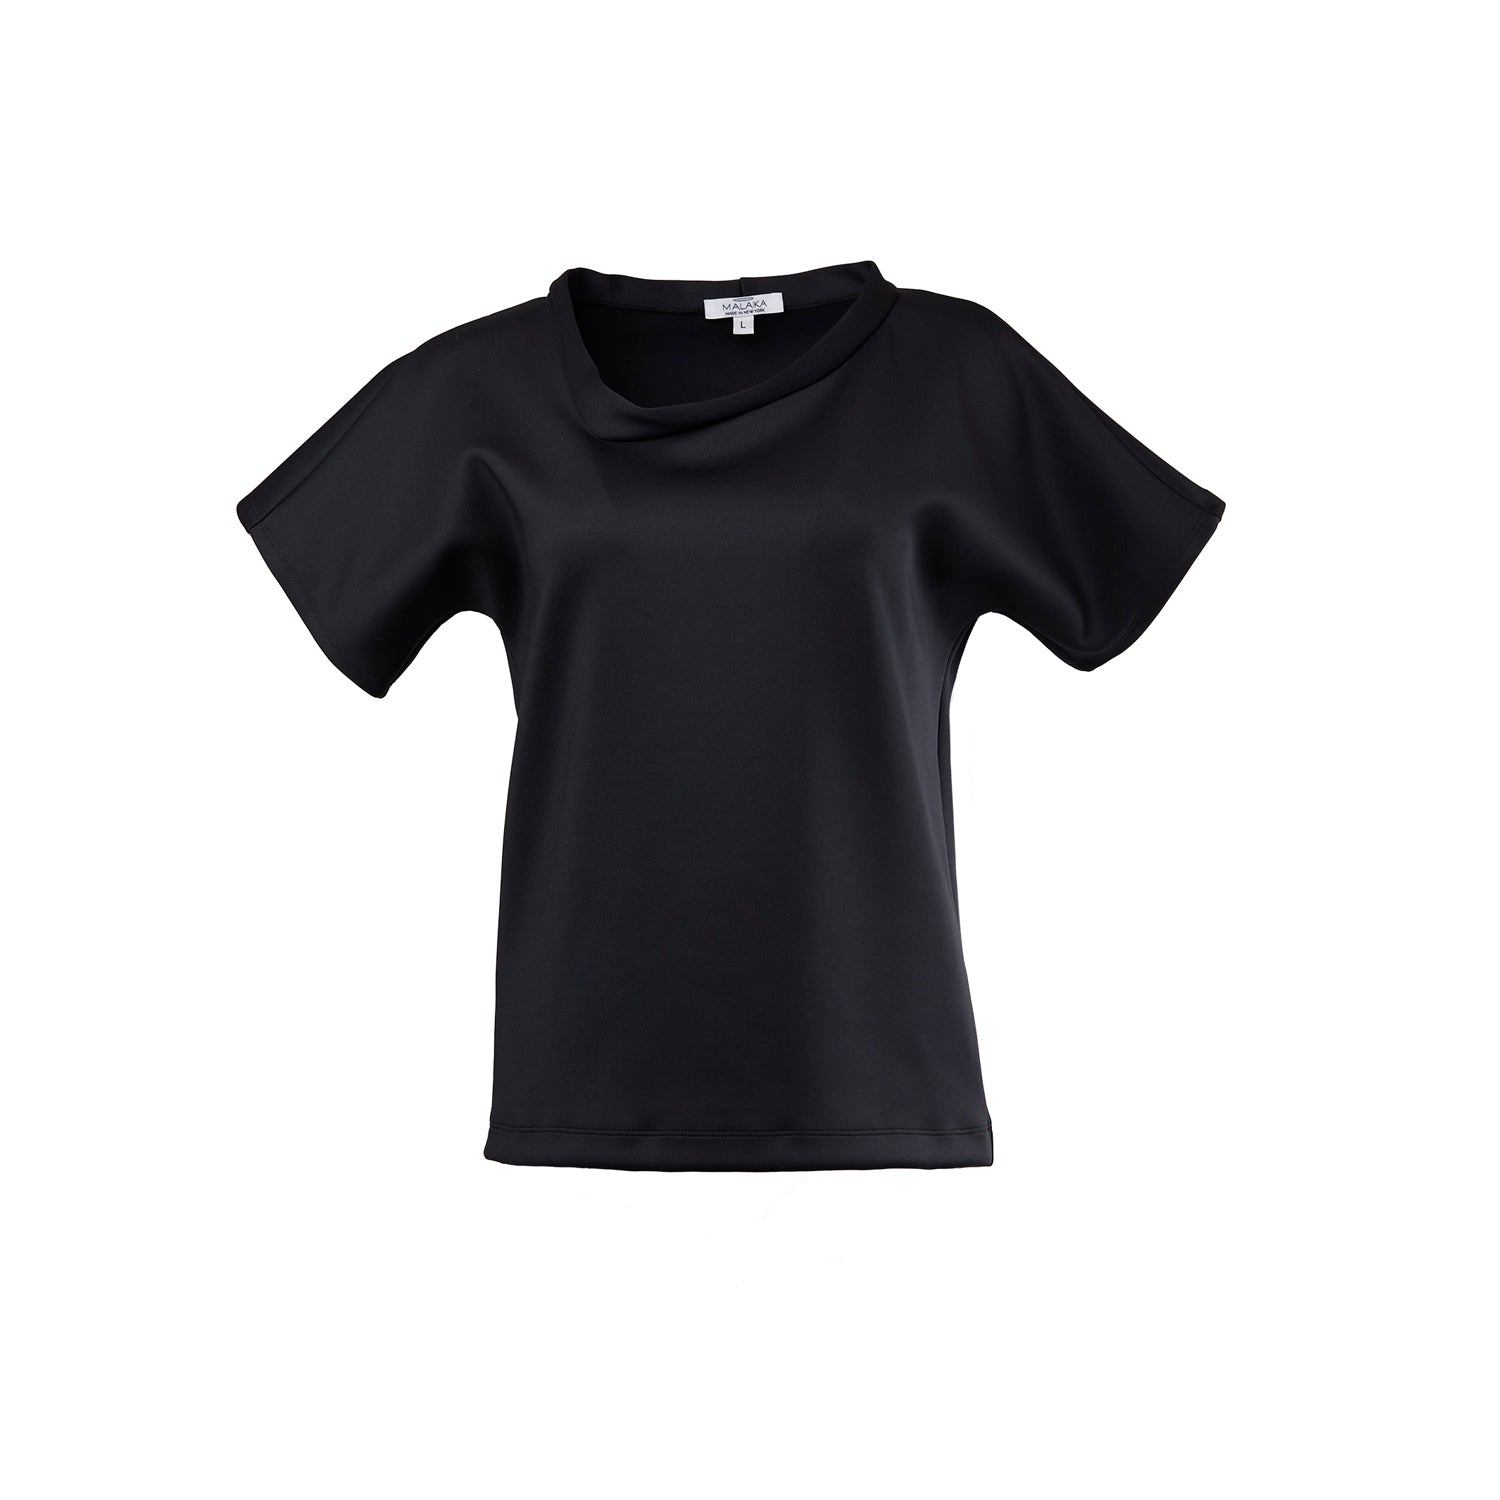 Luxury black t-shirt with a fun collar by Malaika New York